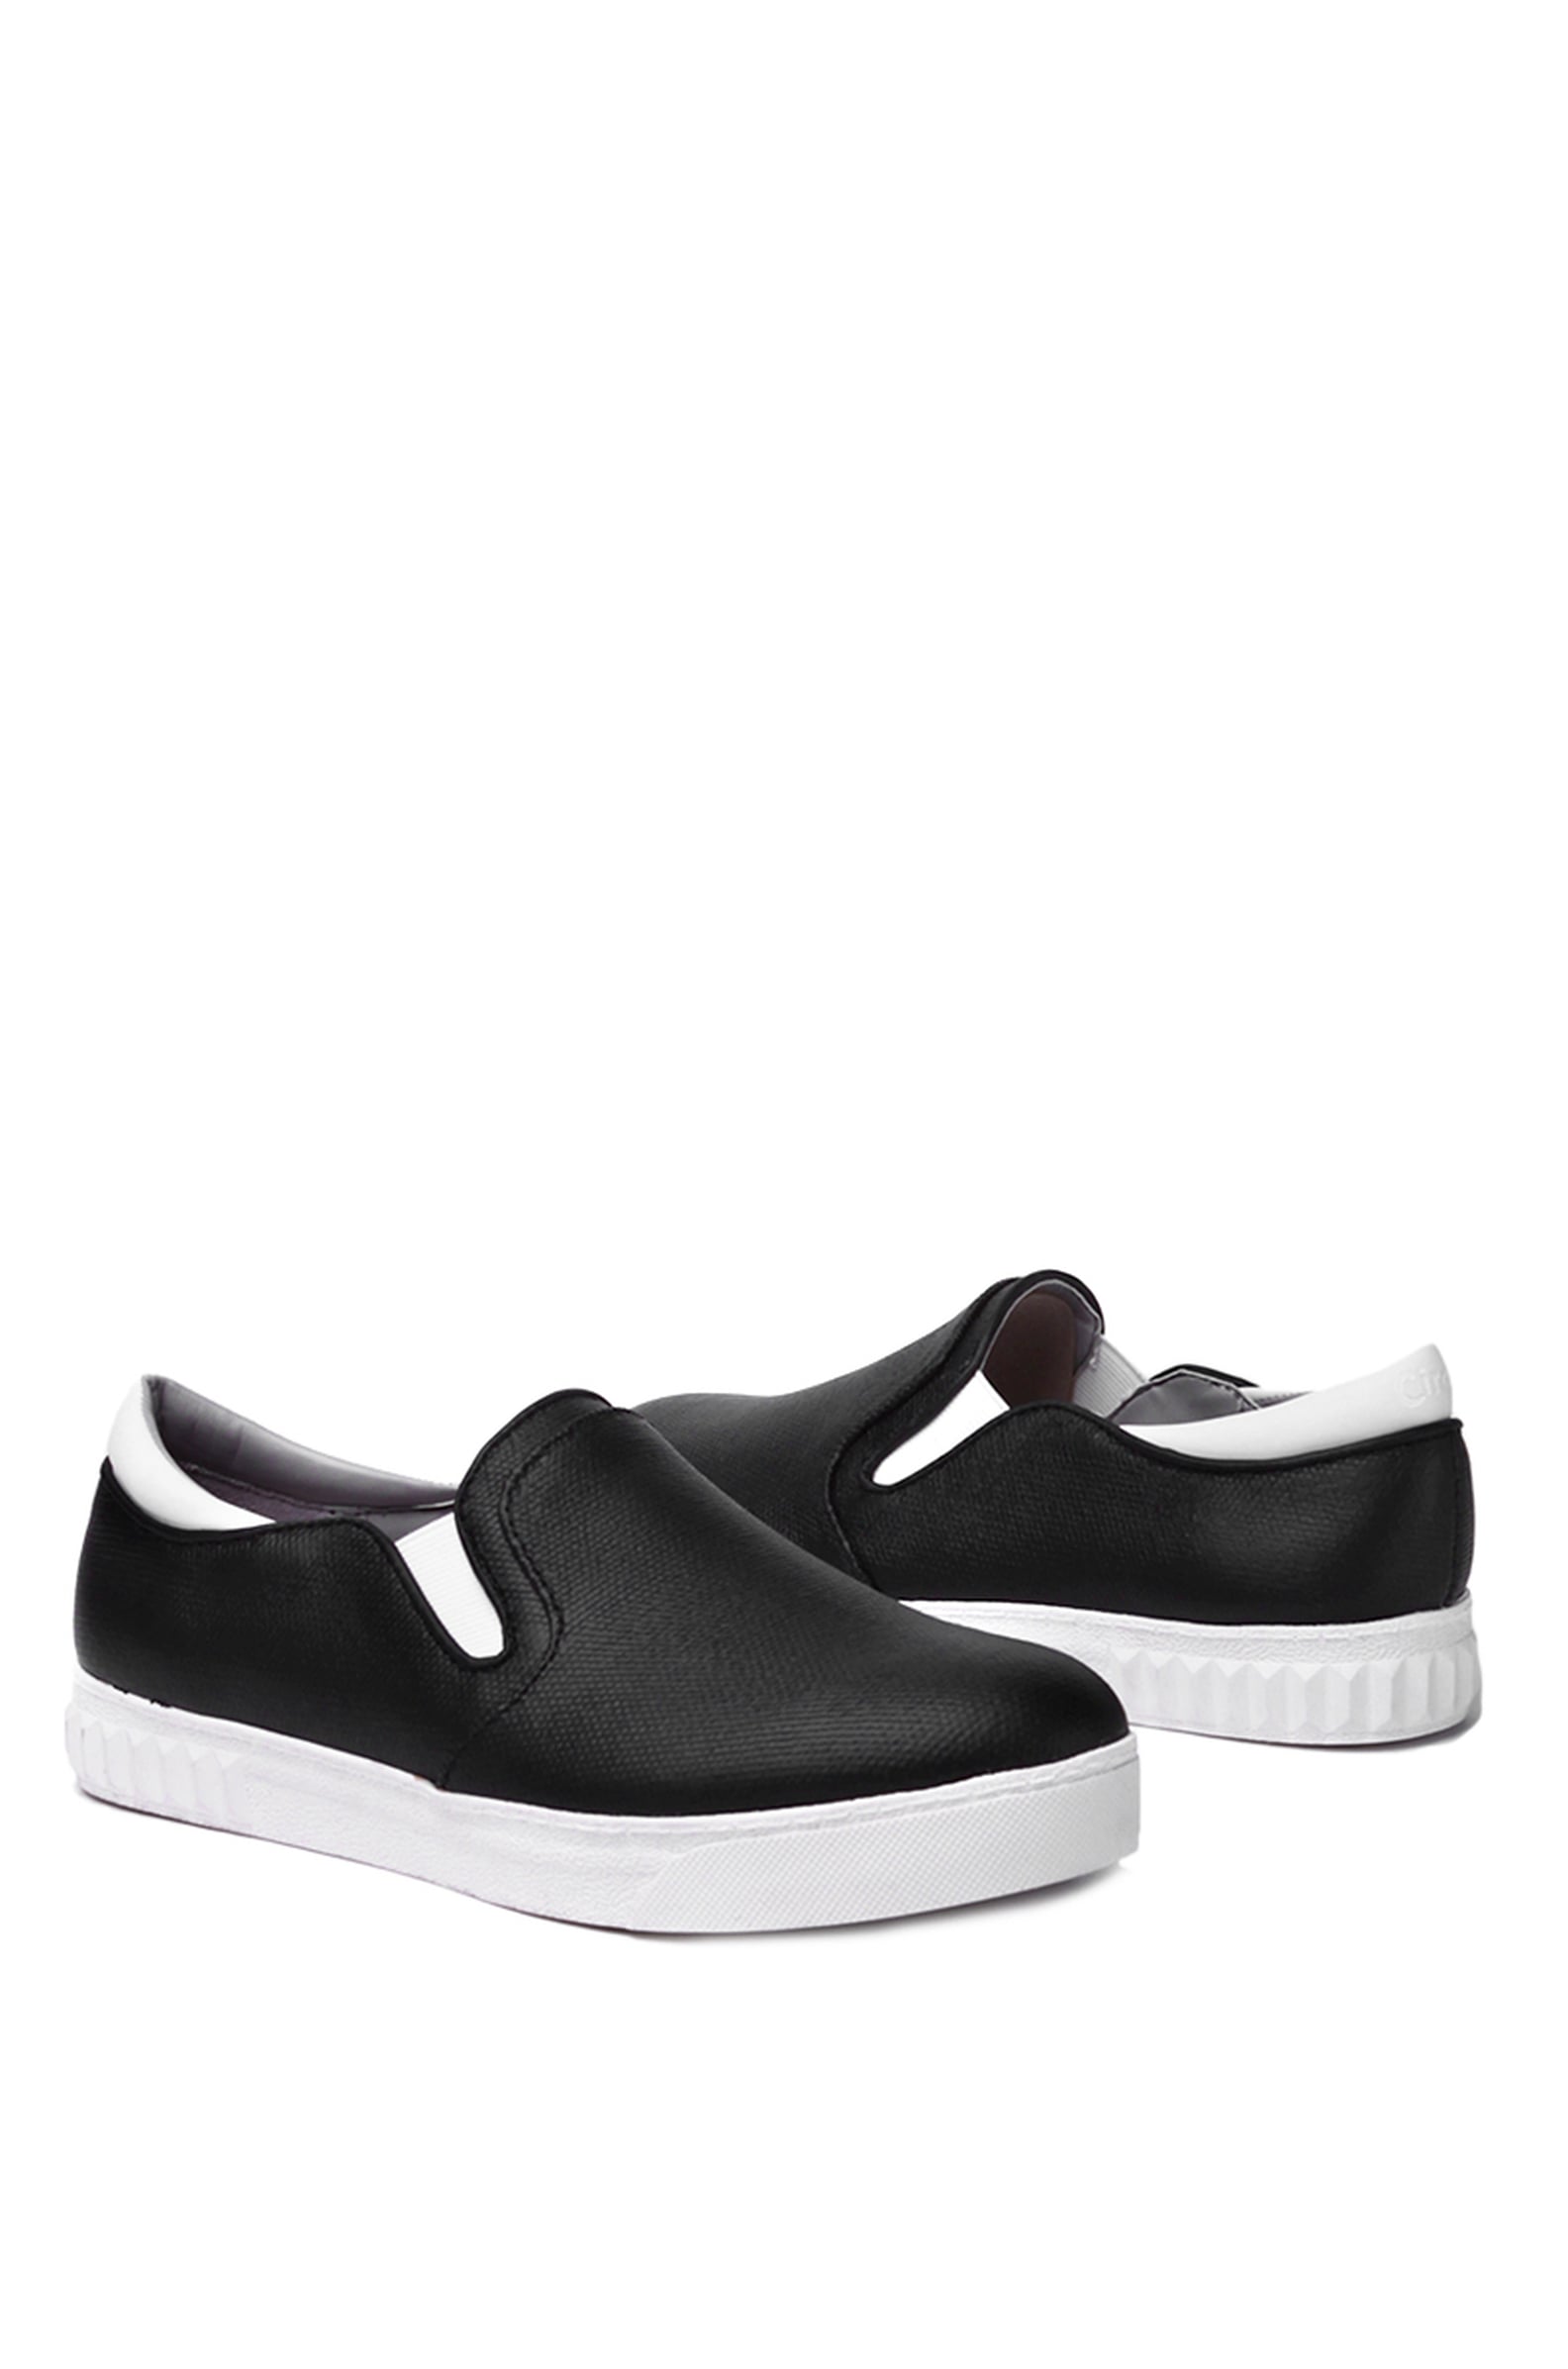 Spring Shoe Trends 2014 | POPSUGAR Fashion